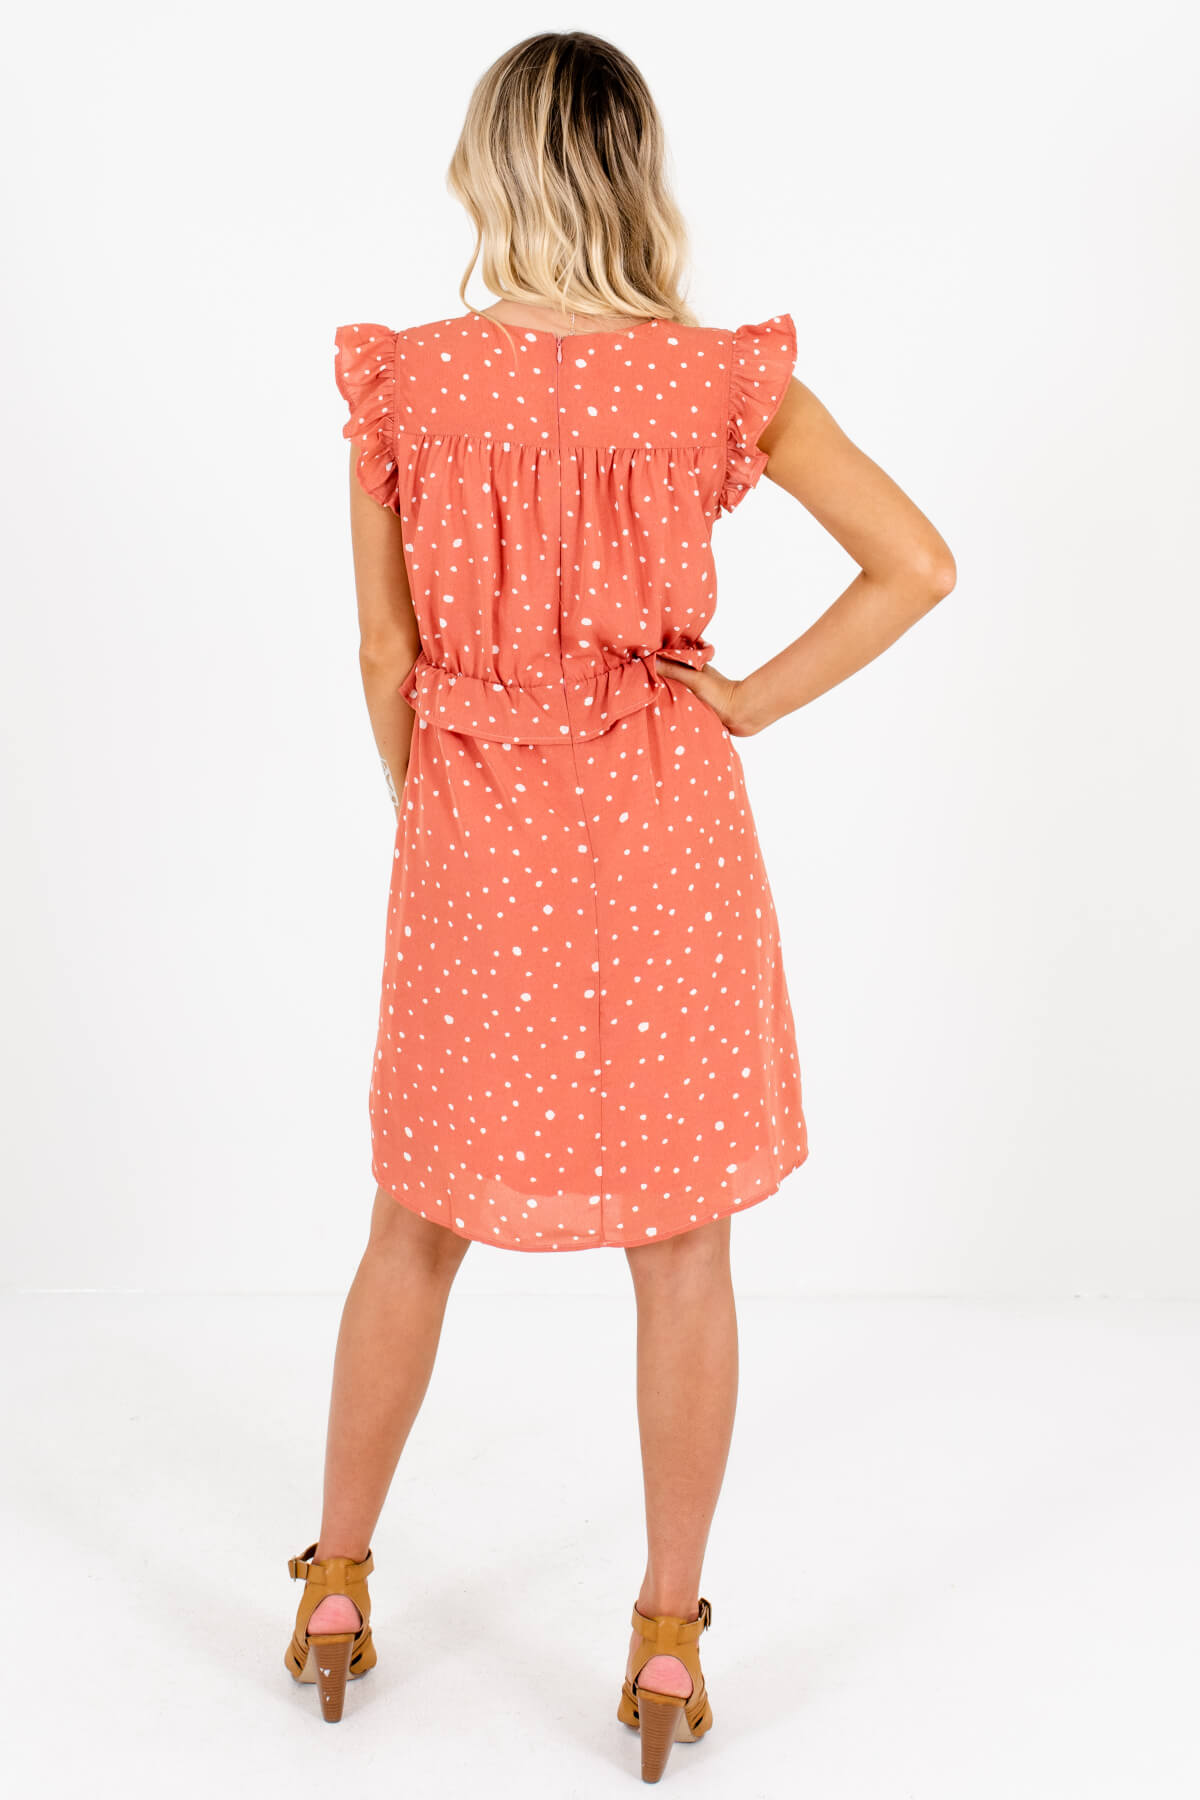 Salmon Pink Polka Dot Ruffle Mini Dresses Affordable Online Boutique